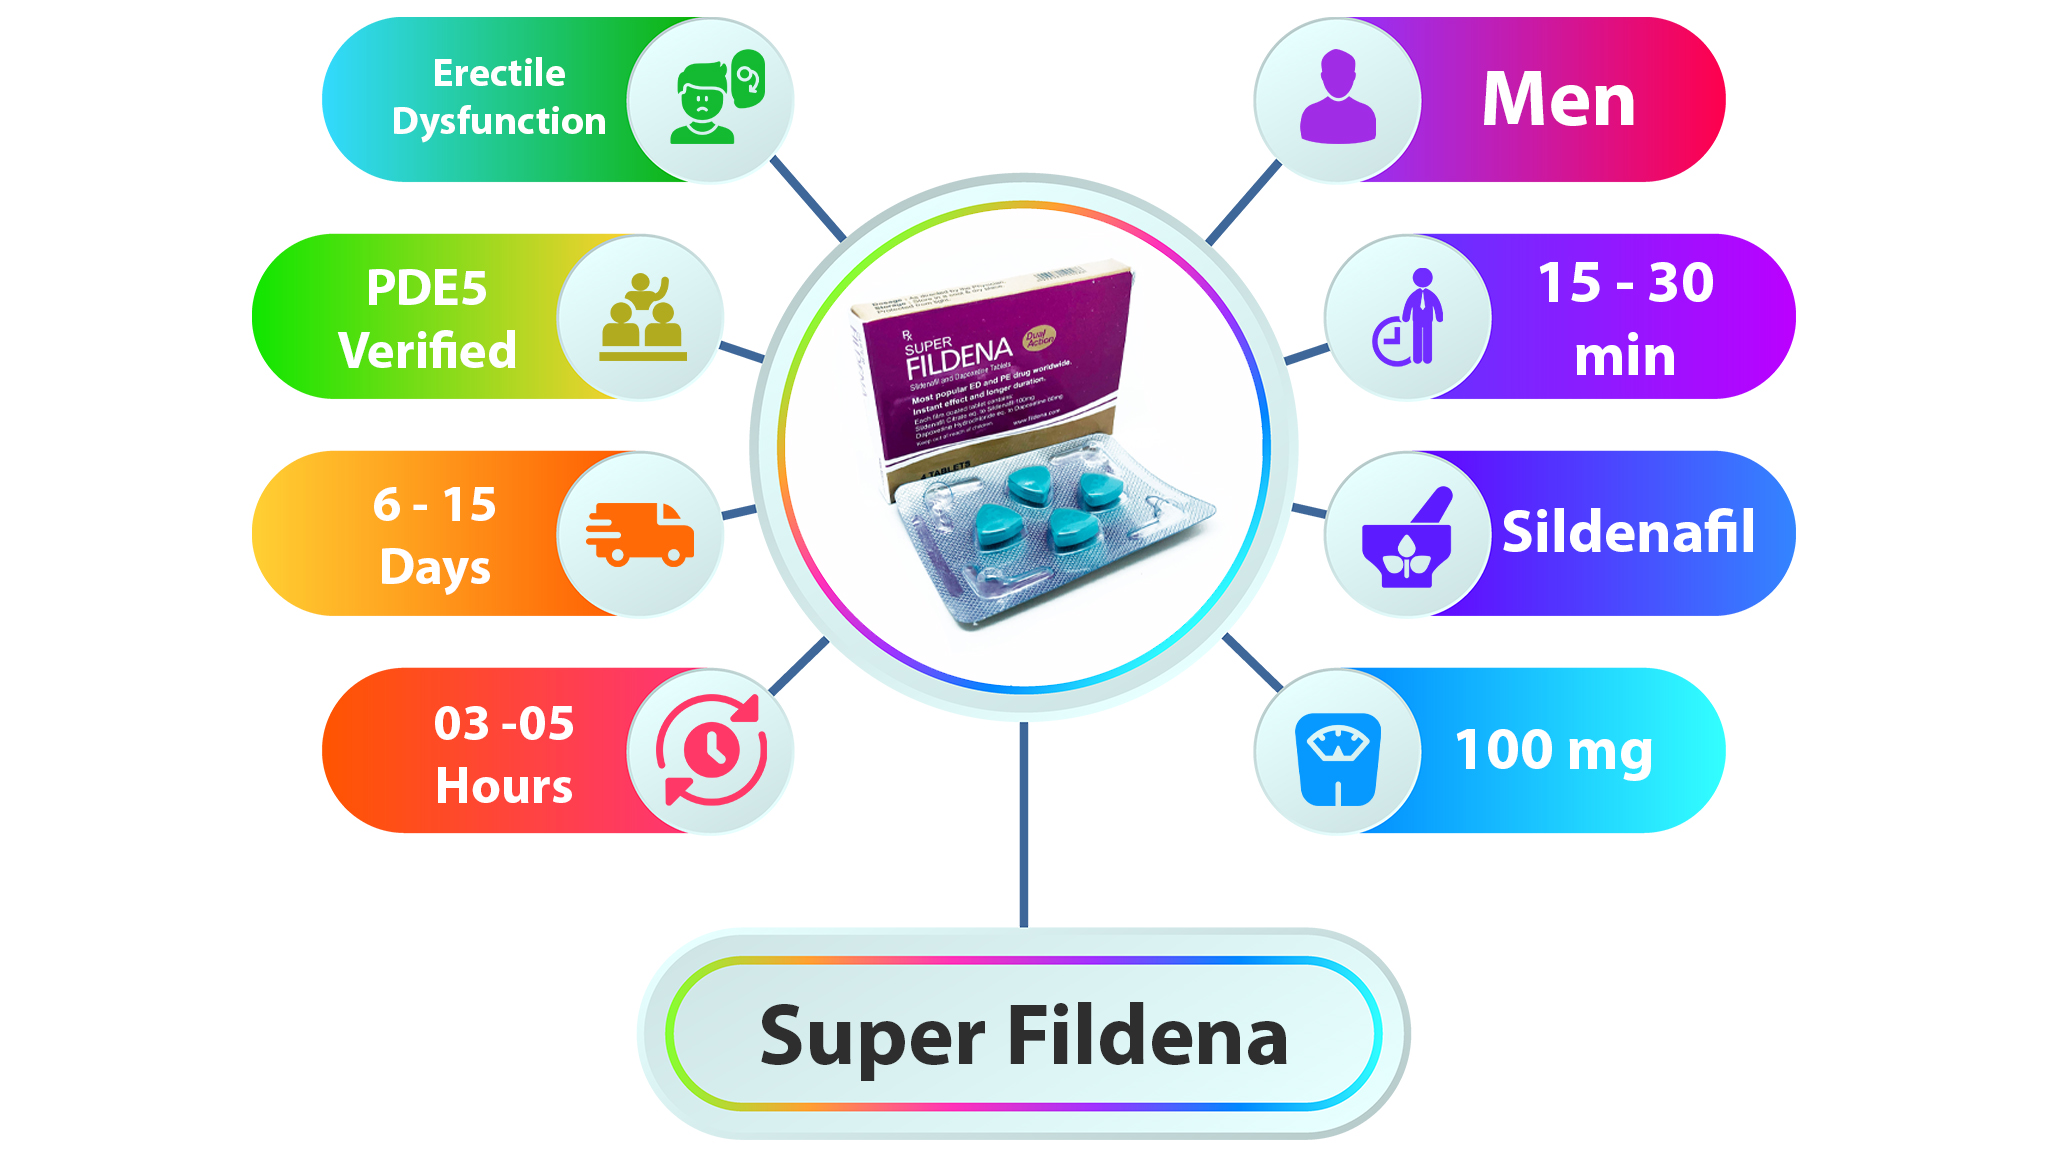 Super Fildena specification